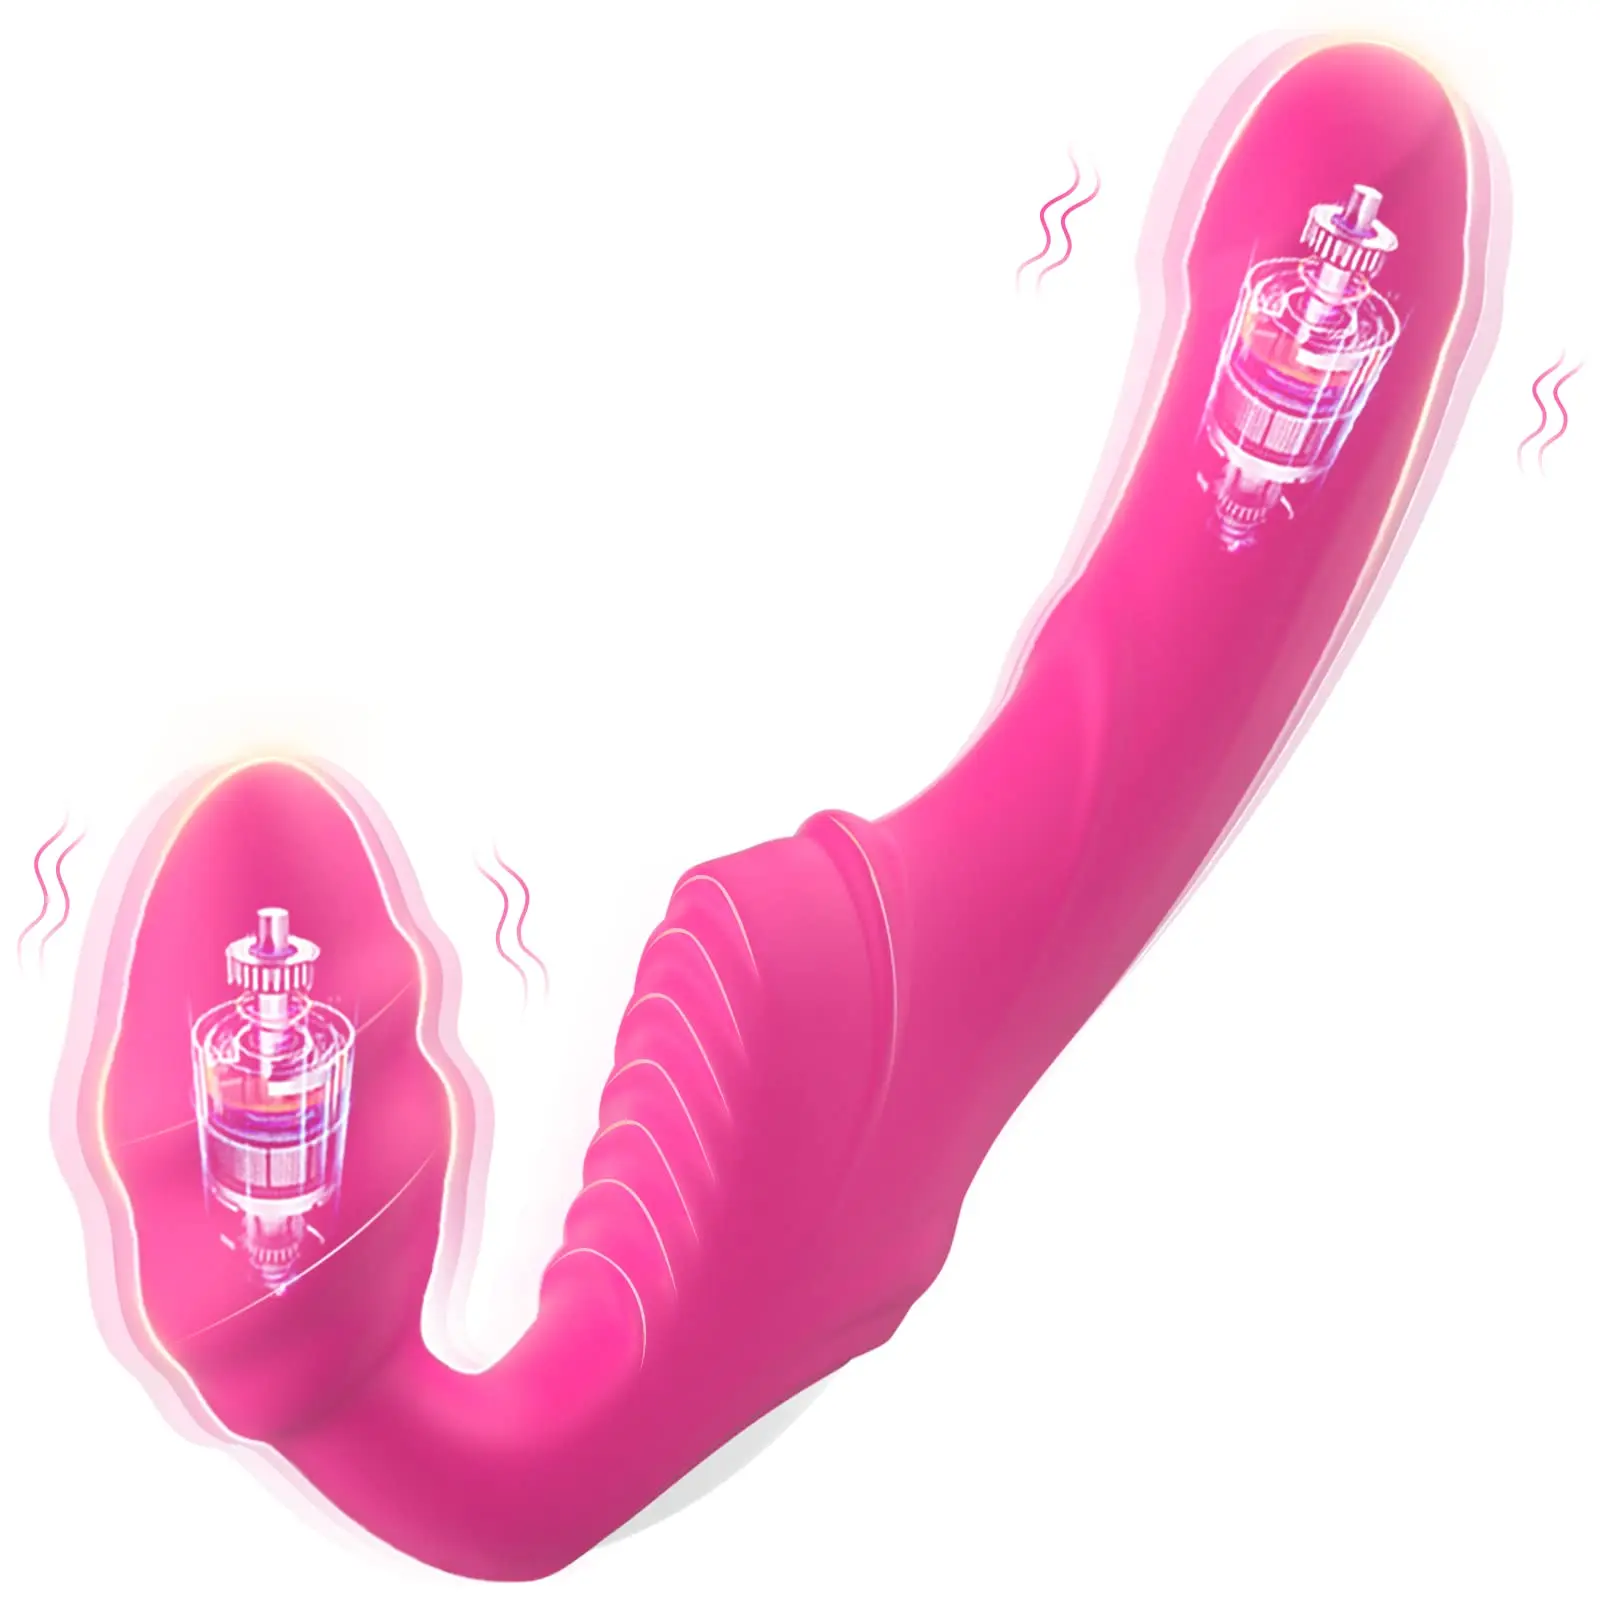 

G-Spot Vibrator Sex Toys for Women - 2 in 1 Vibrators Dildo Rose Vibrating Toys Dildos Adult Toy with 9 Vibration Modes, Sex To